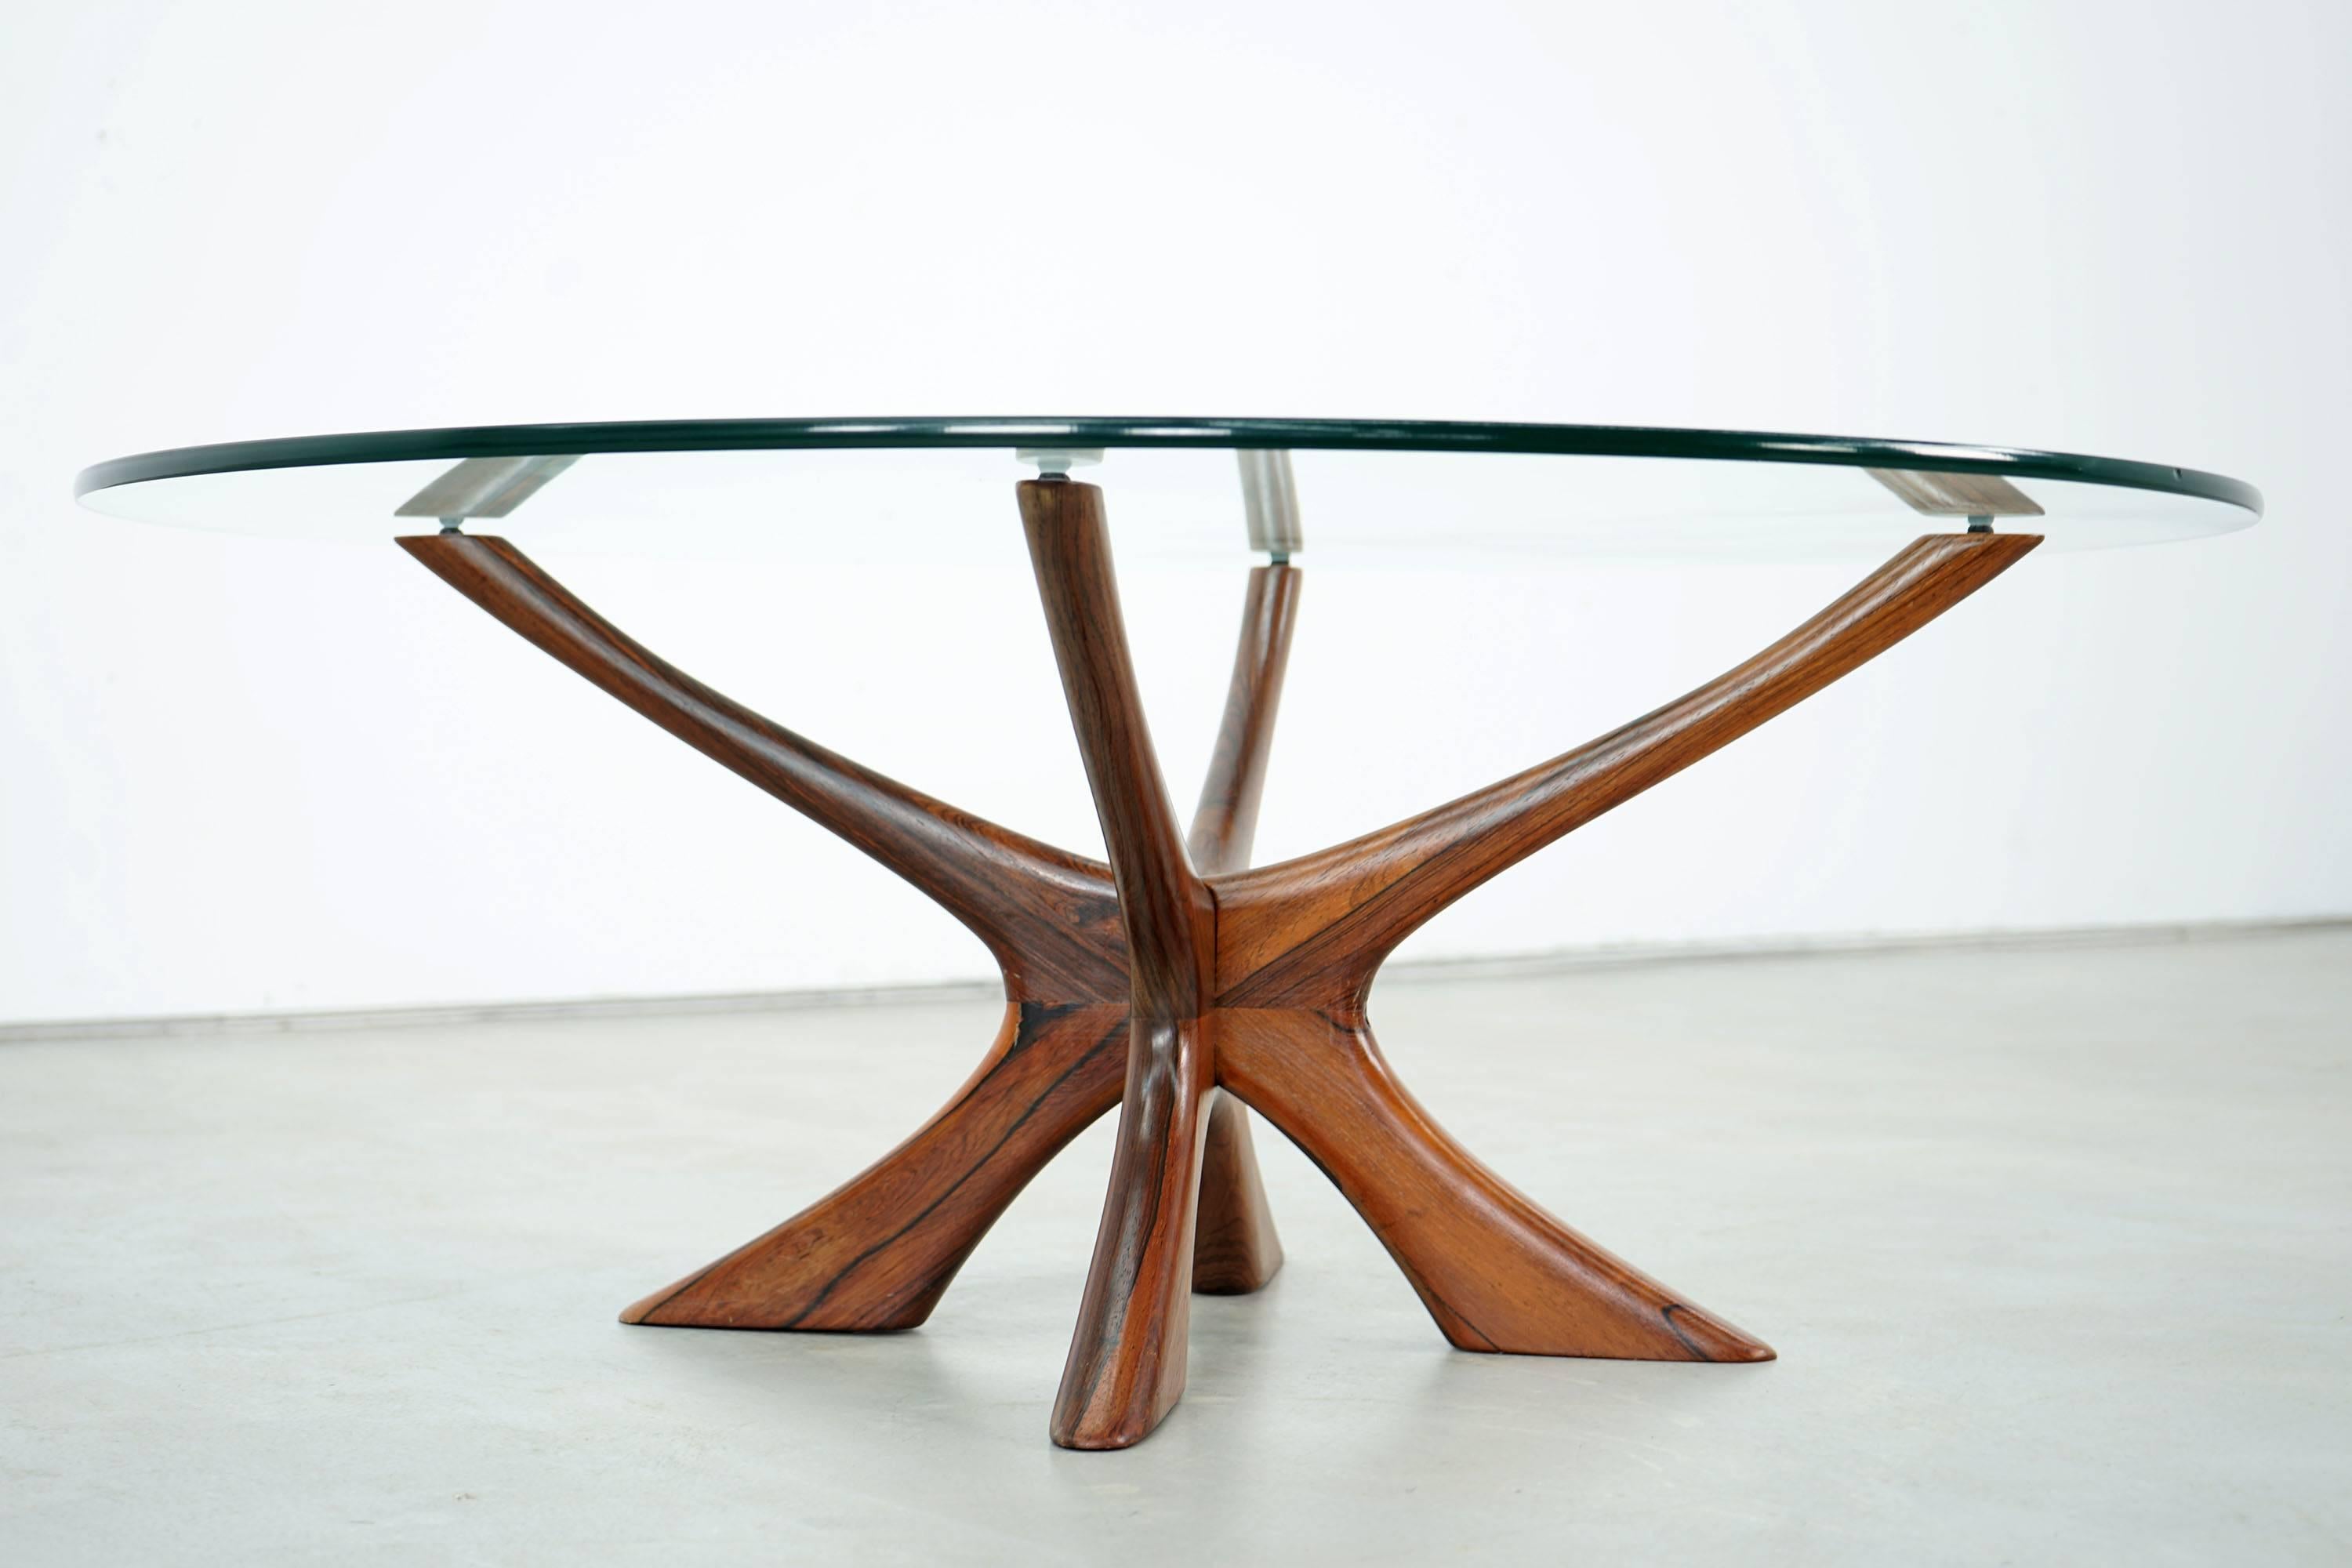 Scandinavian Modern Sculptural Side Table by Illum Wikkelsø for Eilersen of the 1960s For Sale